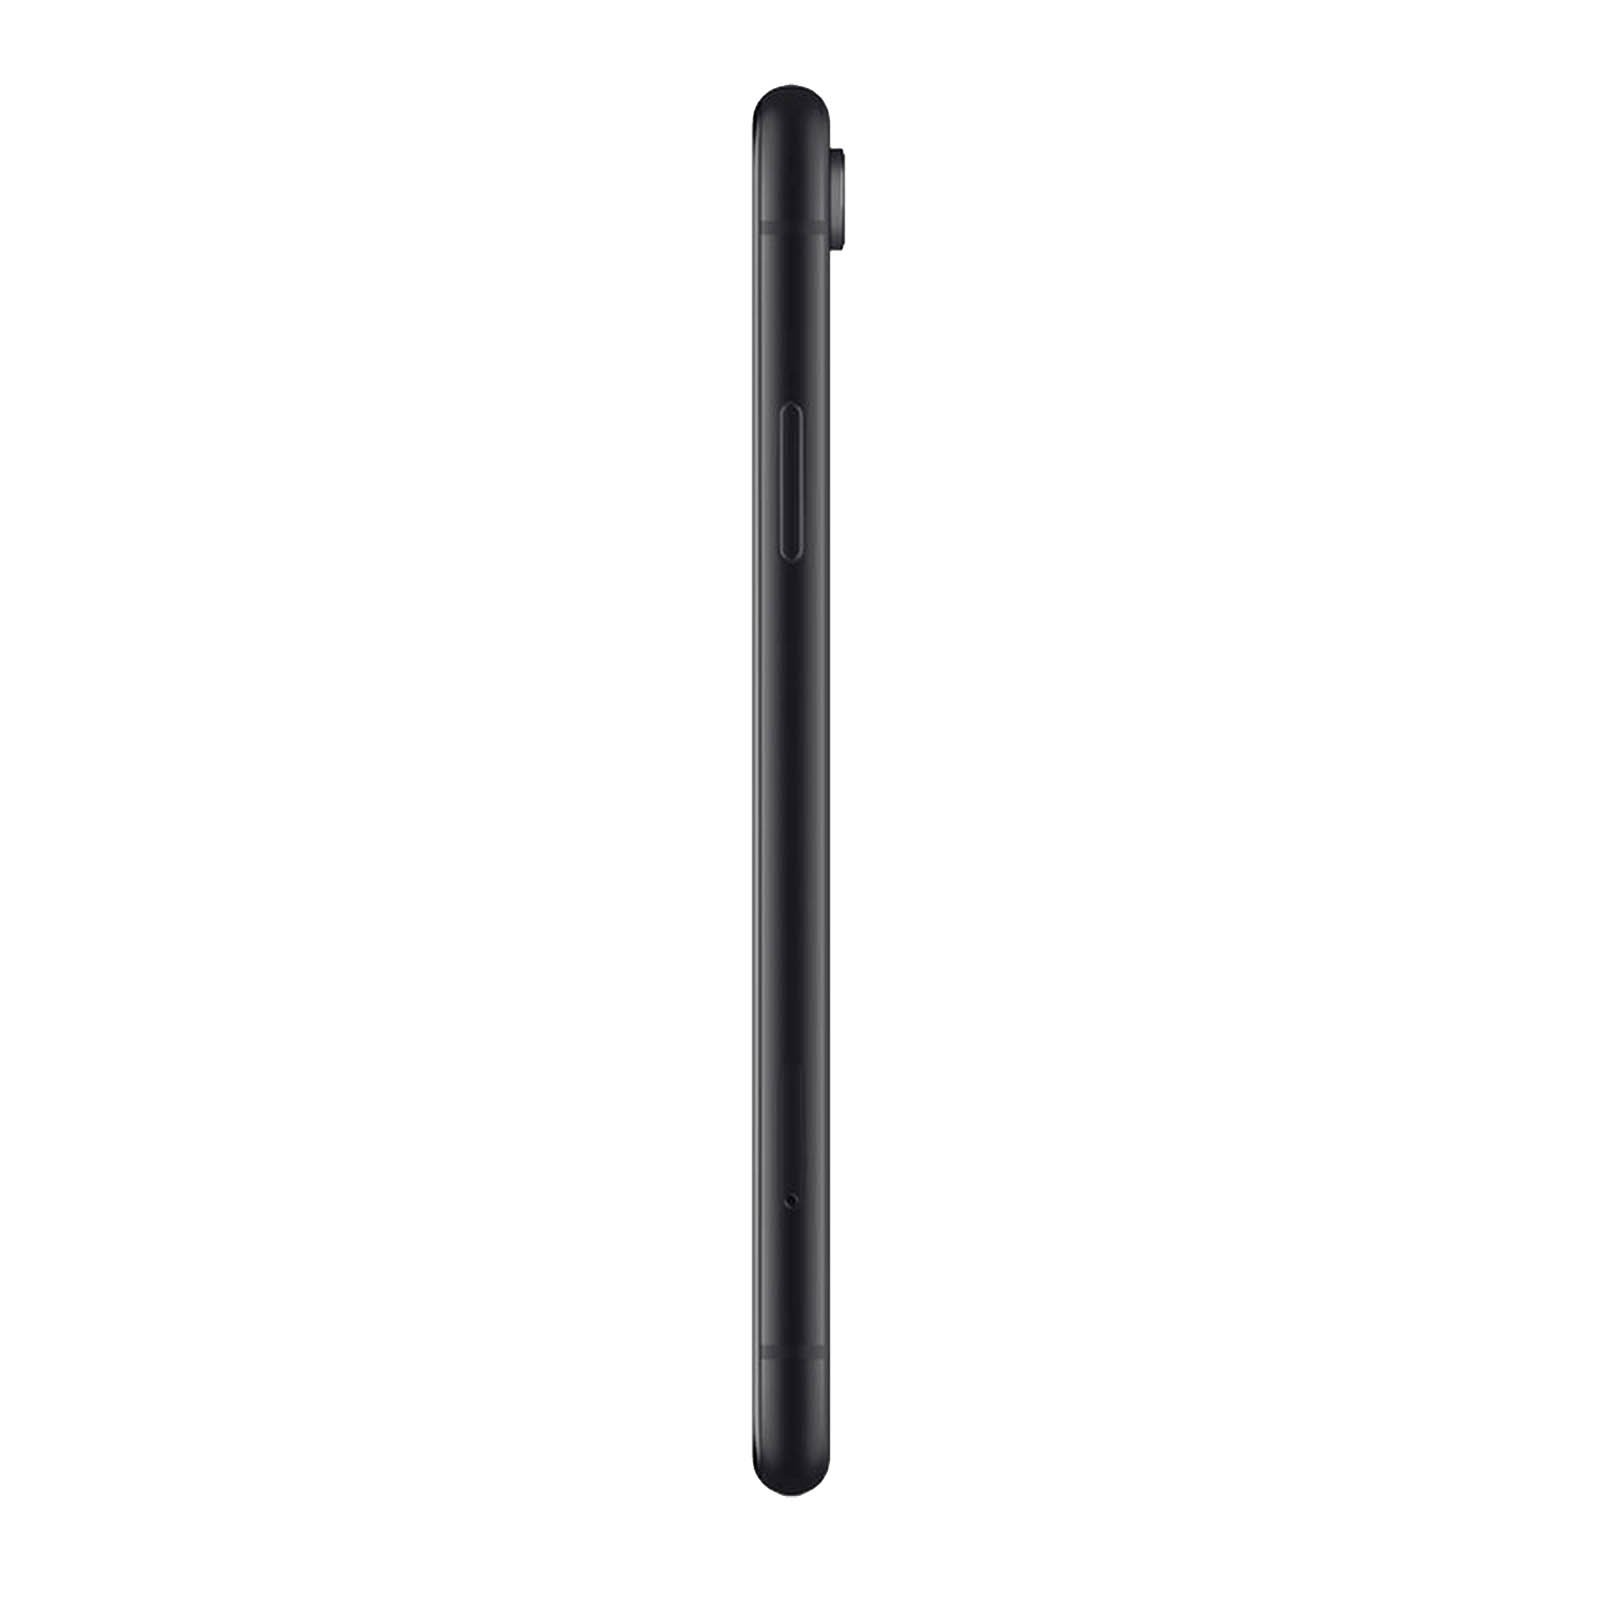 Apple iPhone XR 256GB Black Fair - Unlocked